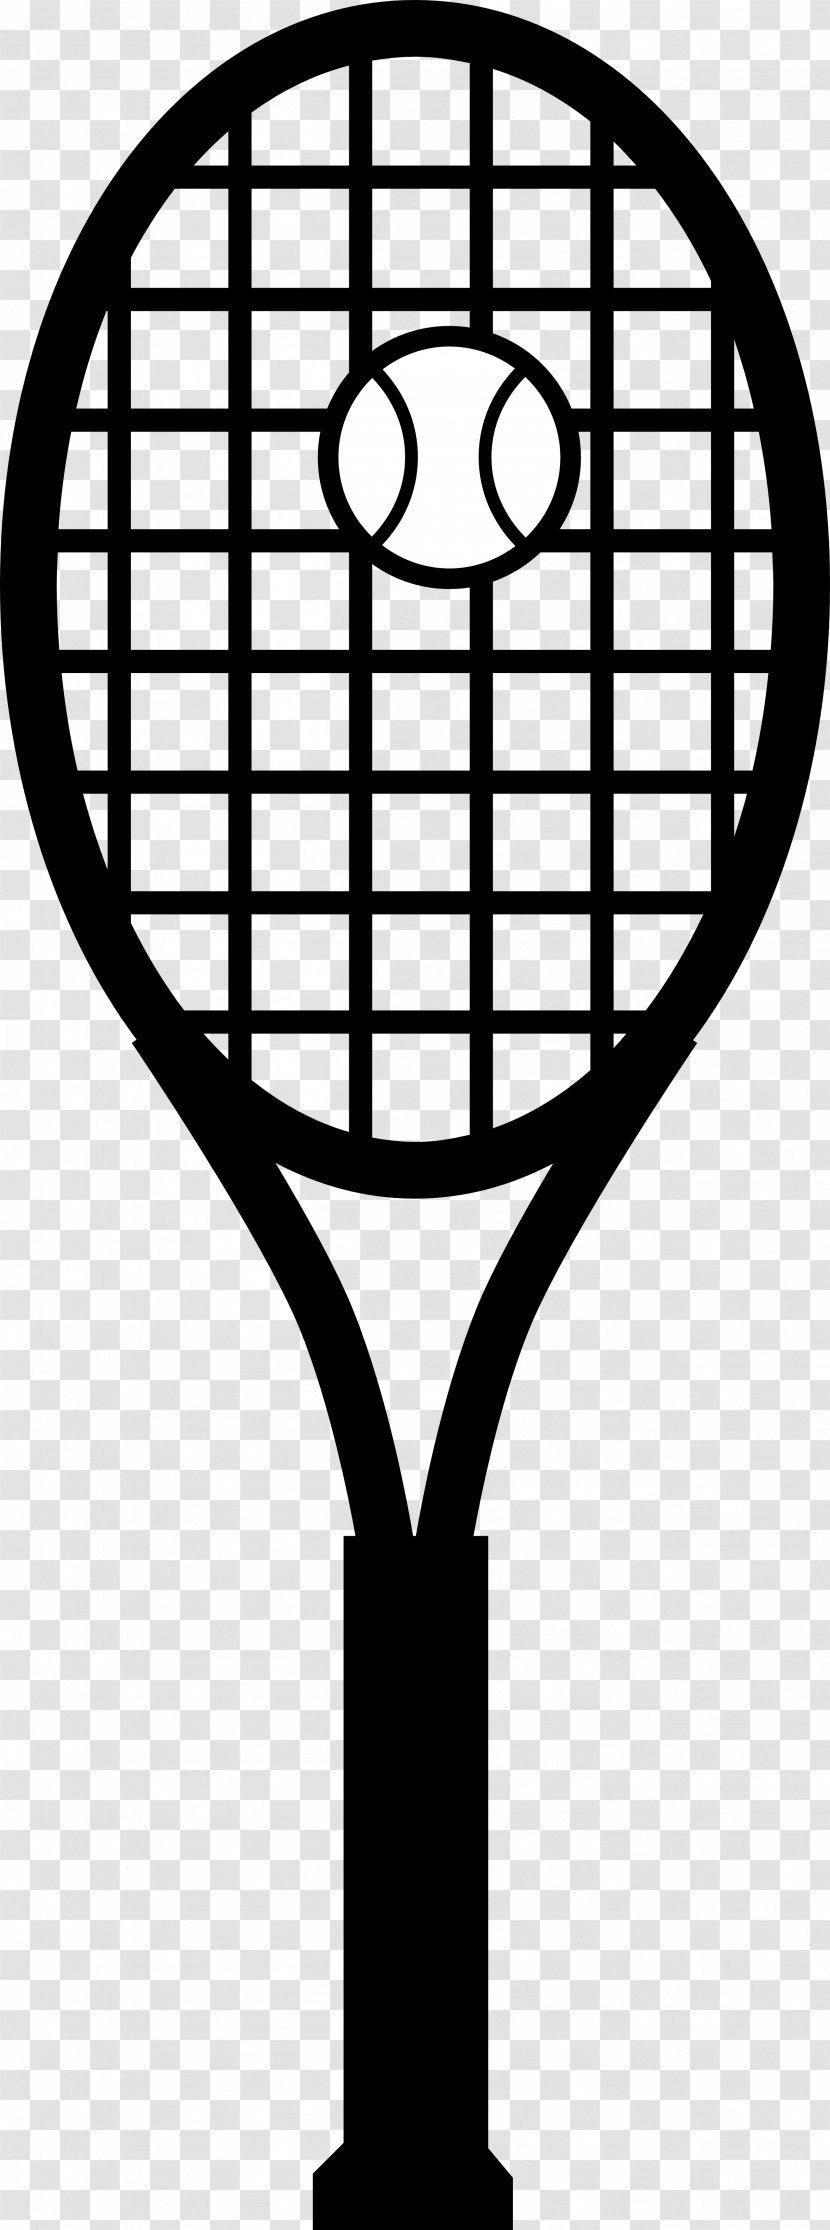 Racket Tennis Ball Clip Art - Picture Transparent PNG